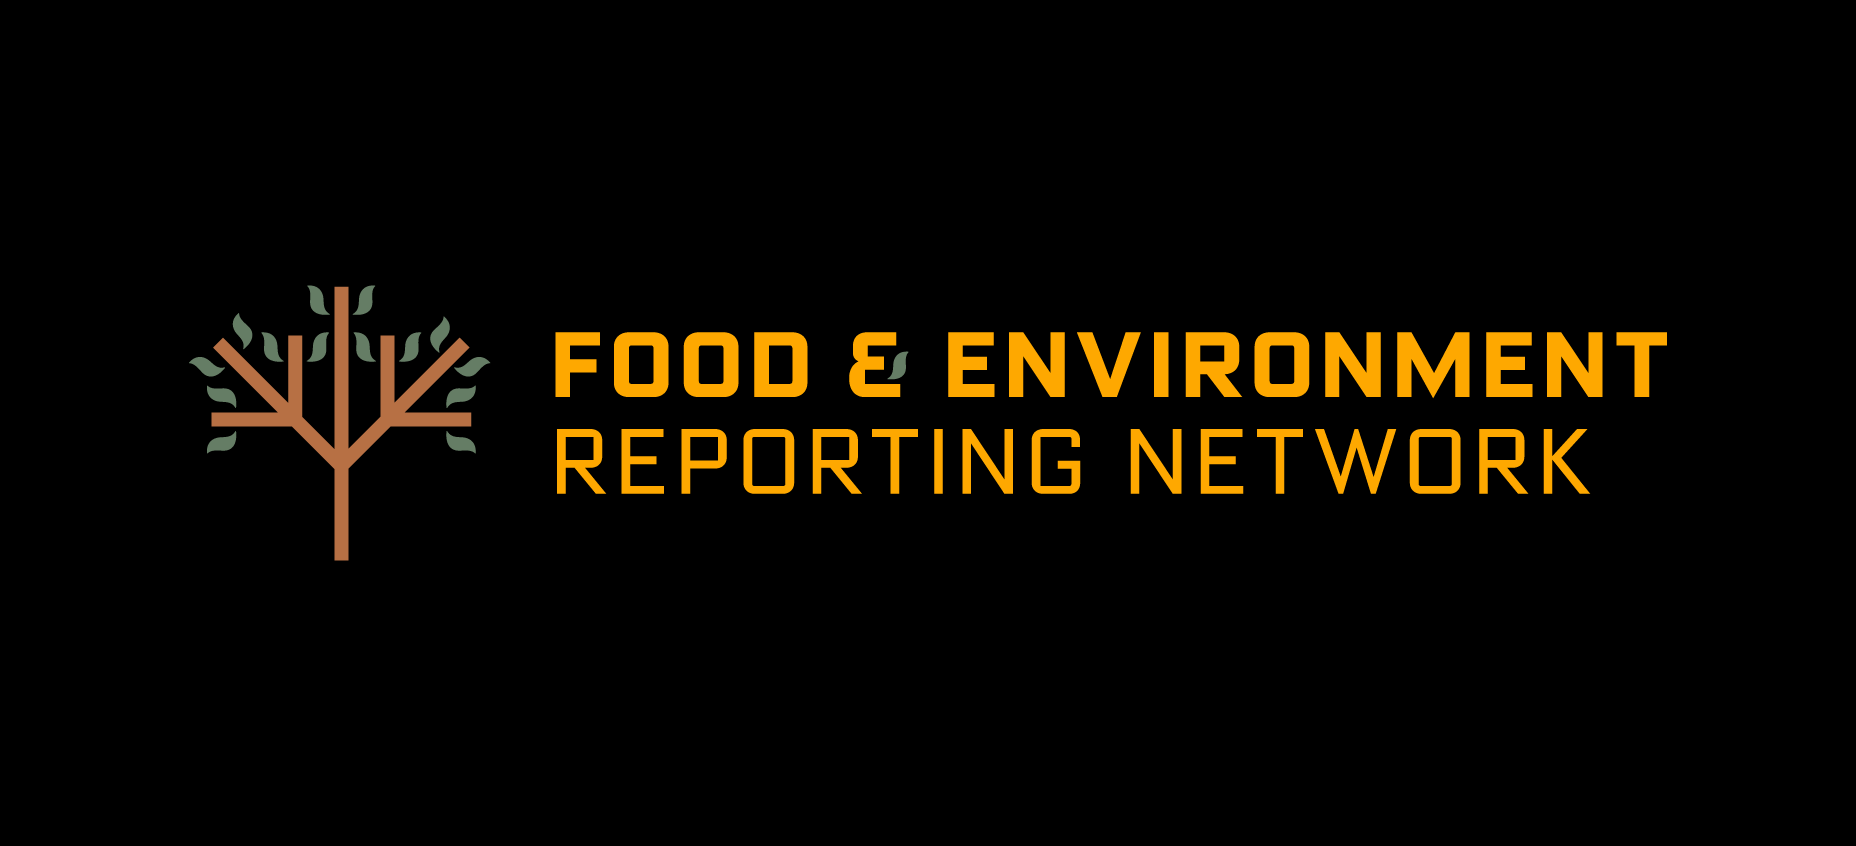 Food & Environment Reporting Network logo